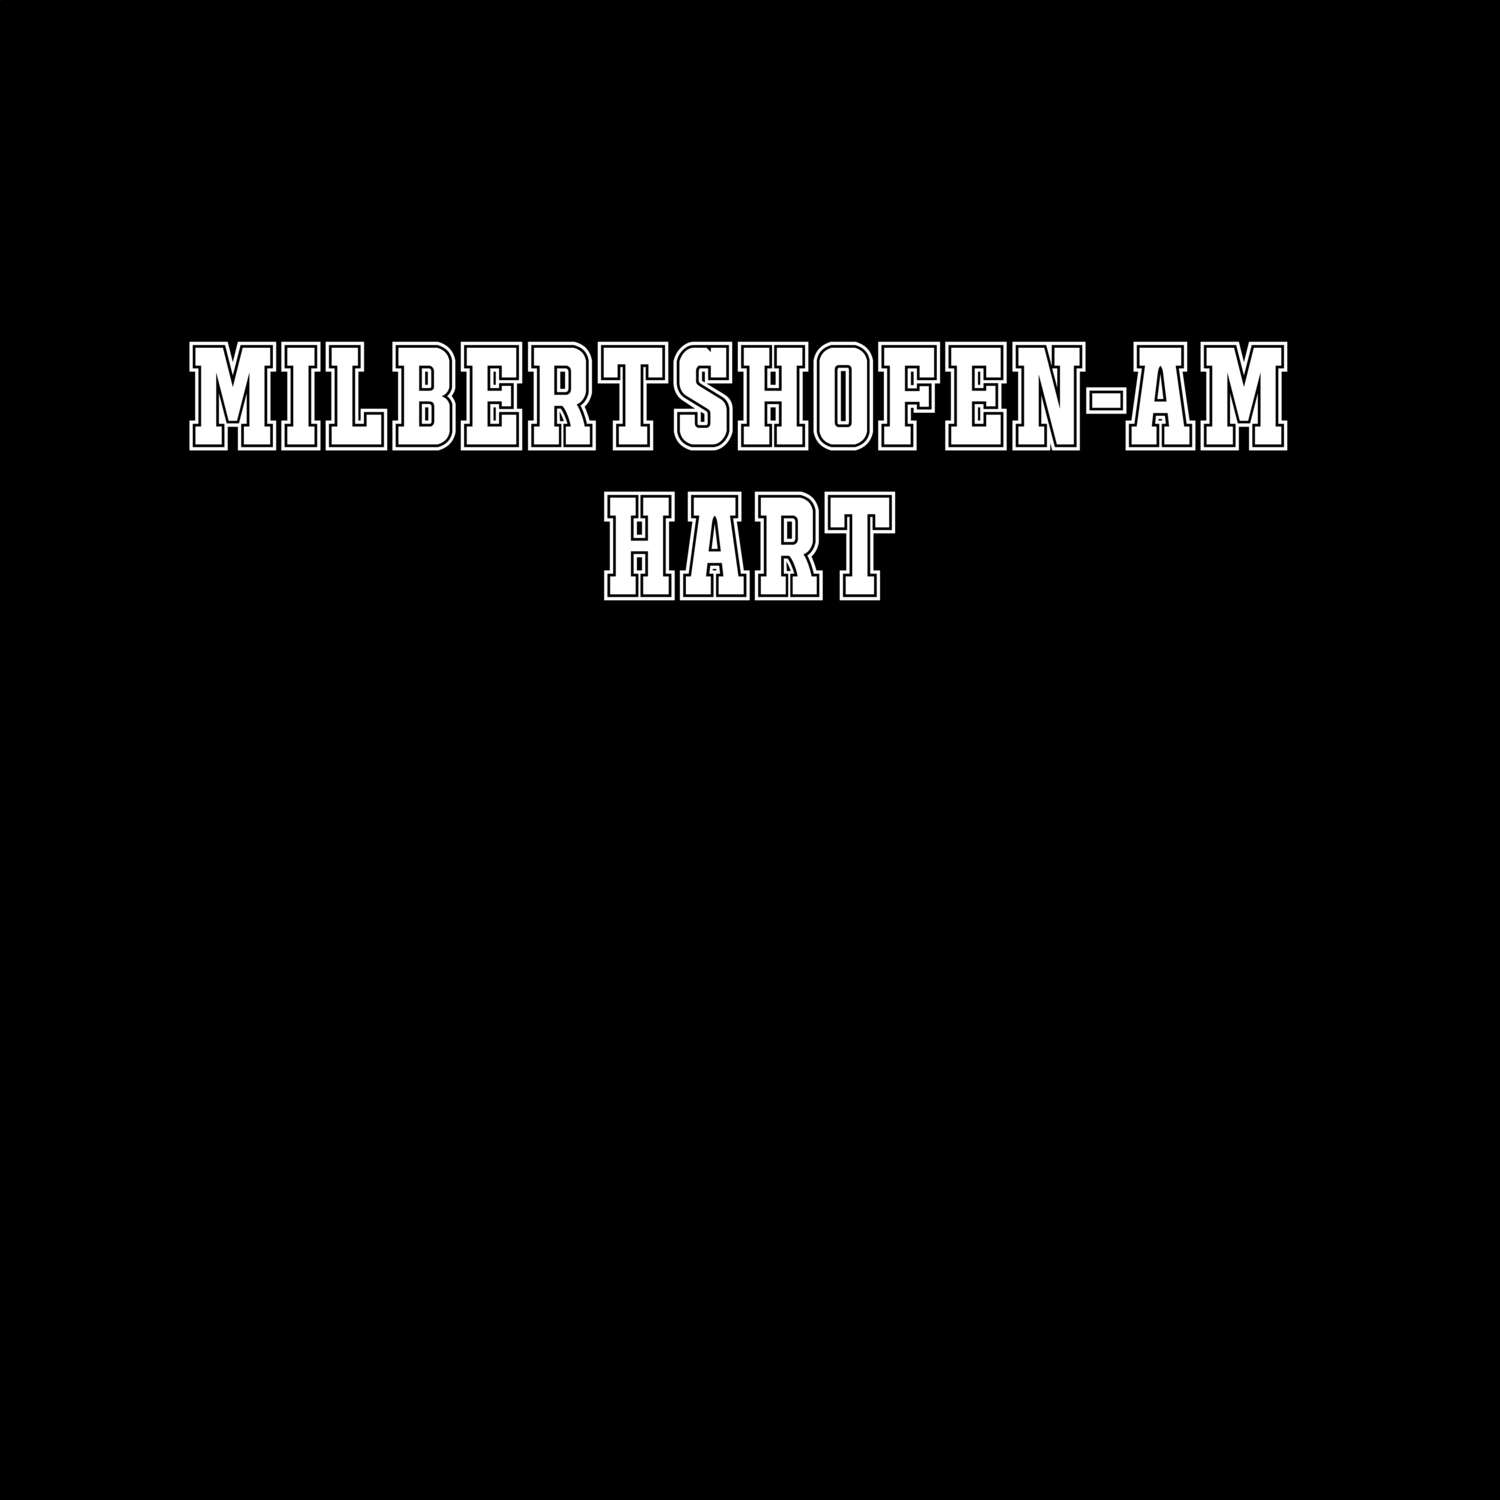 Milbertshofen-Am Hart T-Shirt »Classic«